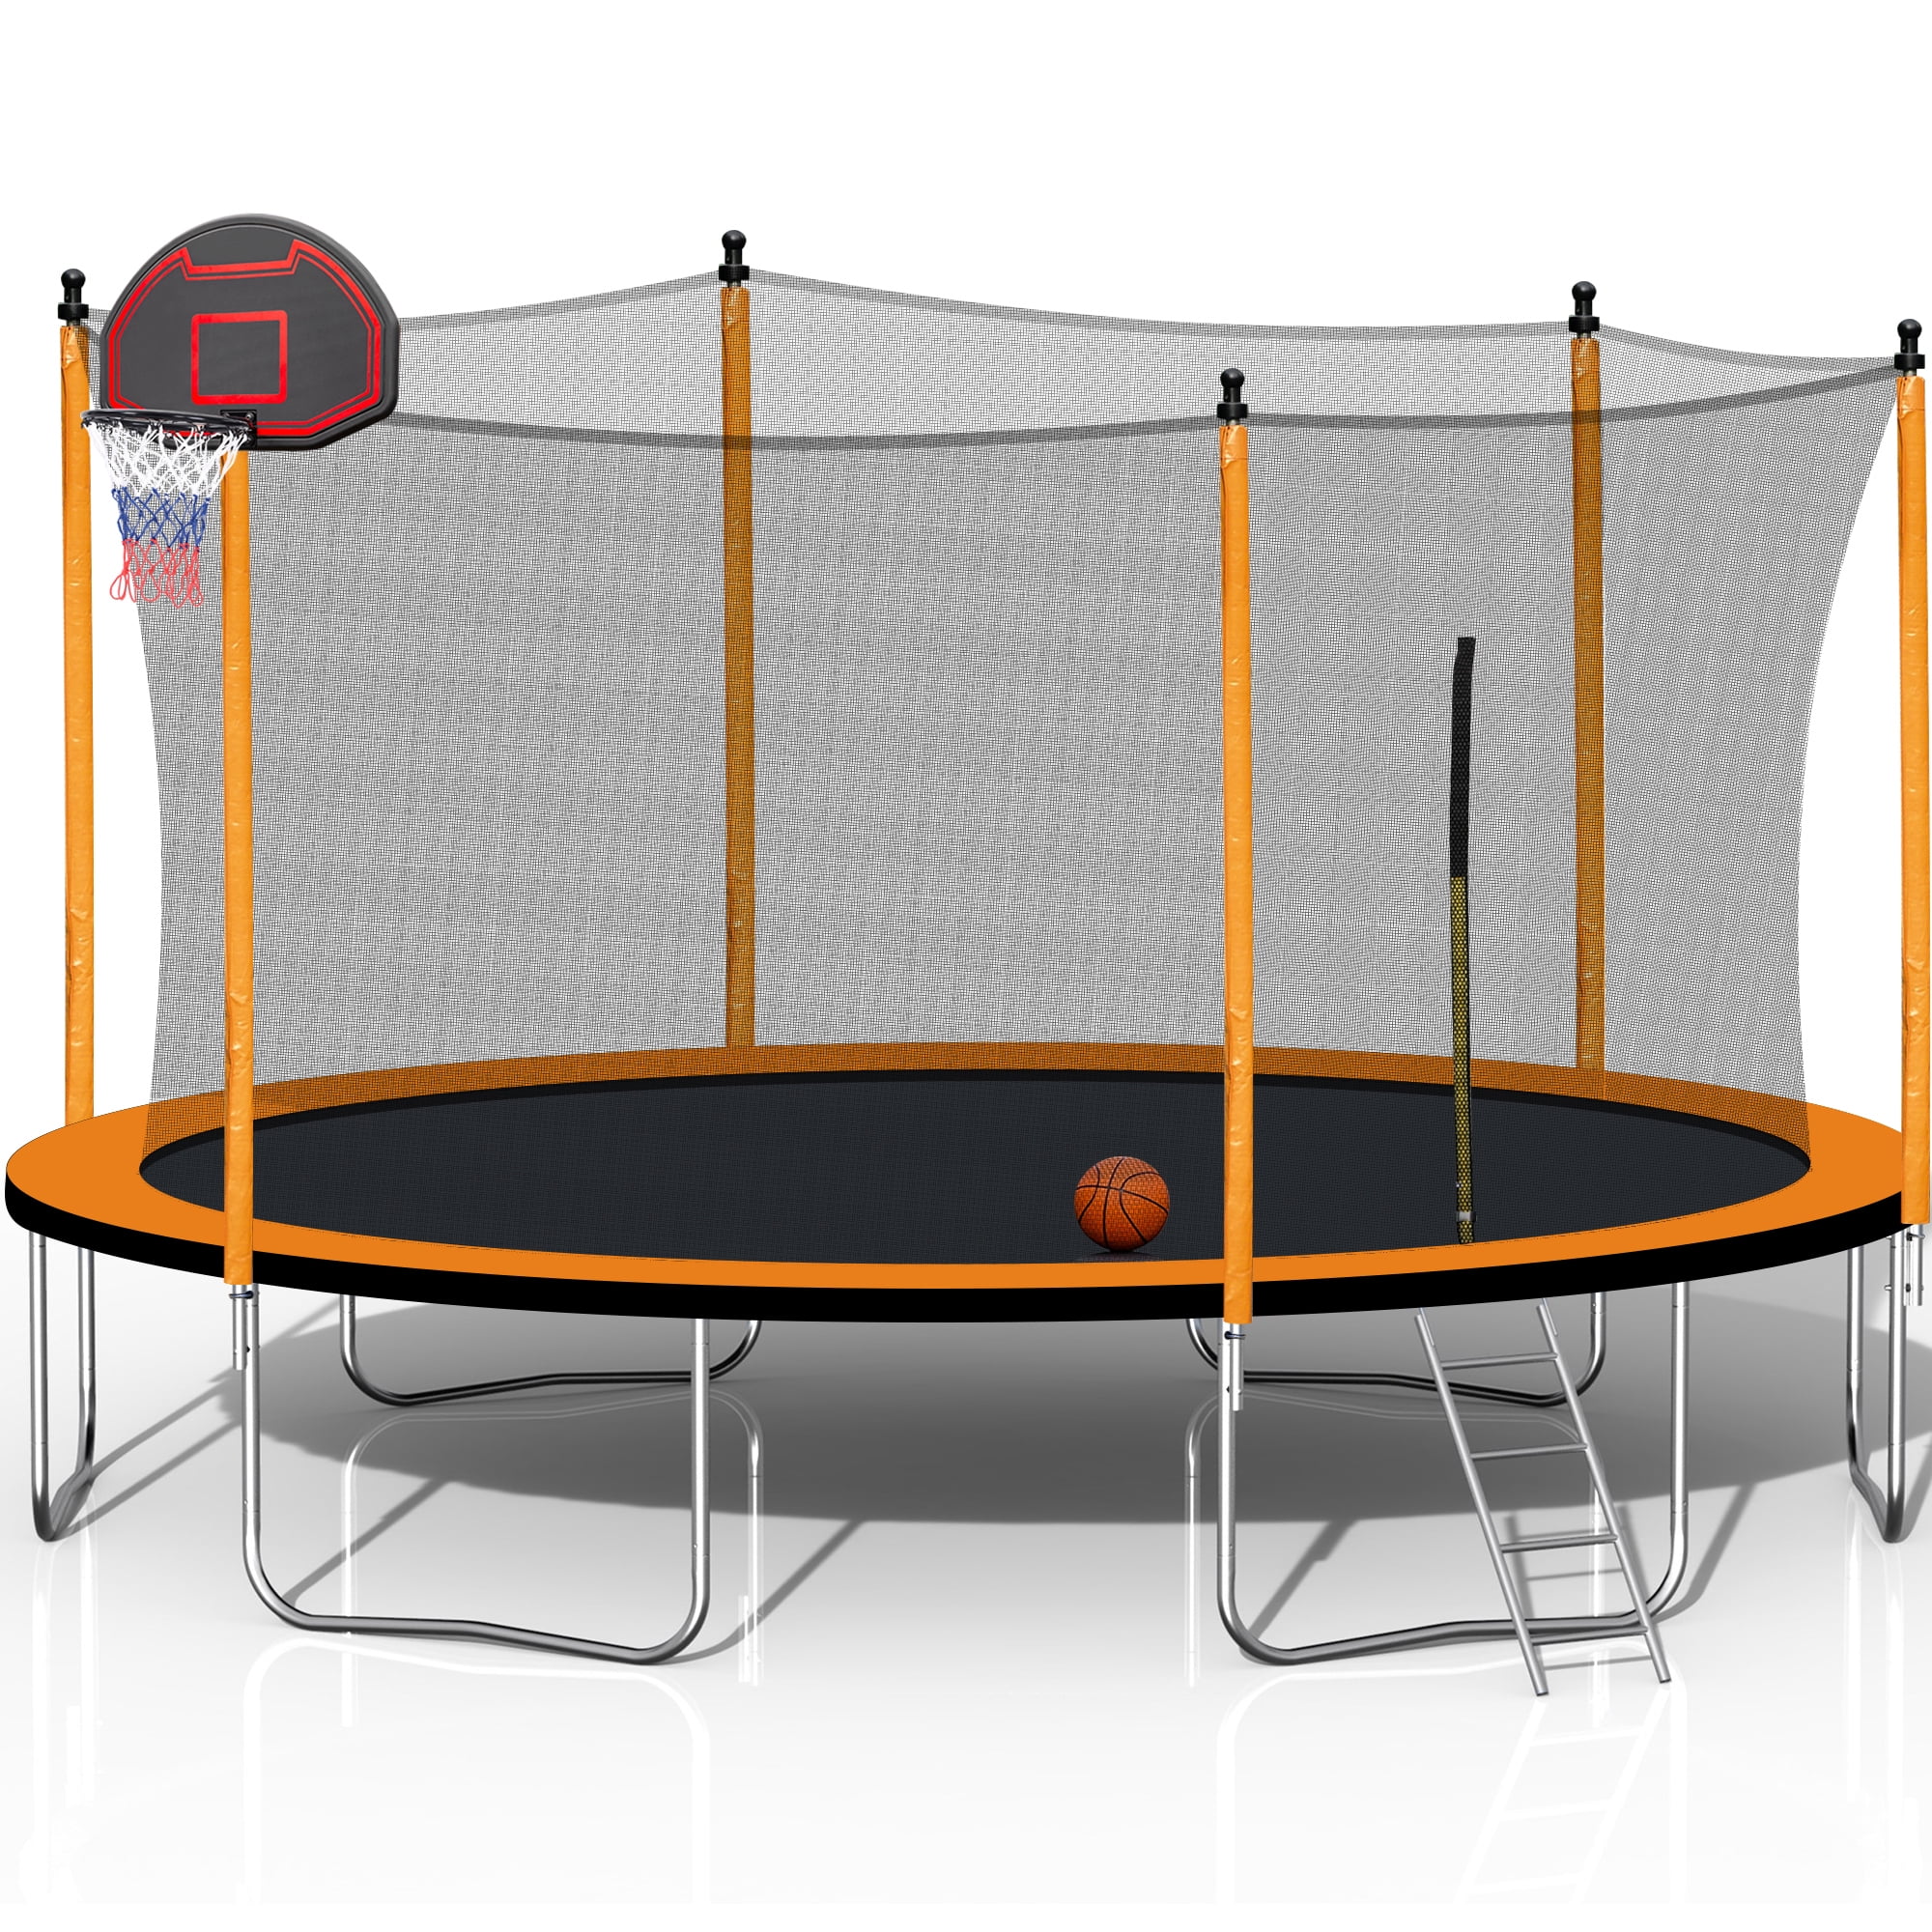 moobody 15FT Trampoline with Basketball Hoop Inflator and Ladder(Inner Safety Enclosure) Orange